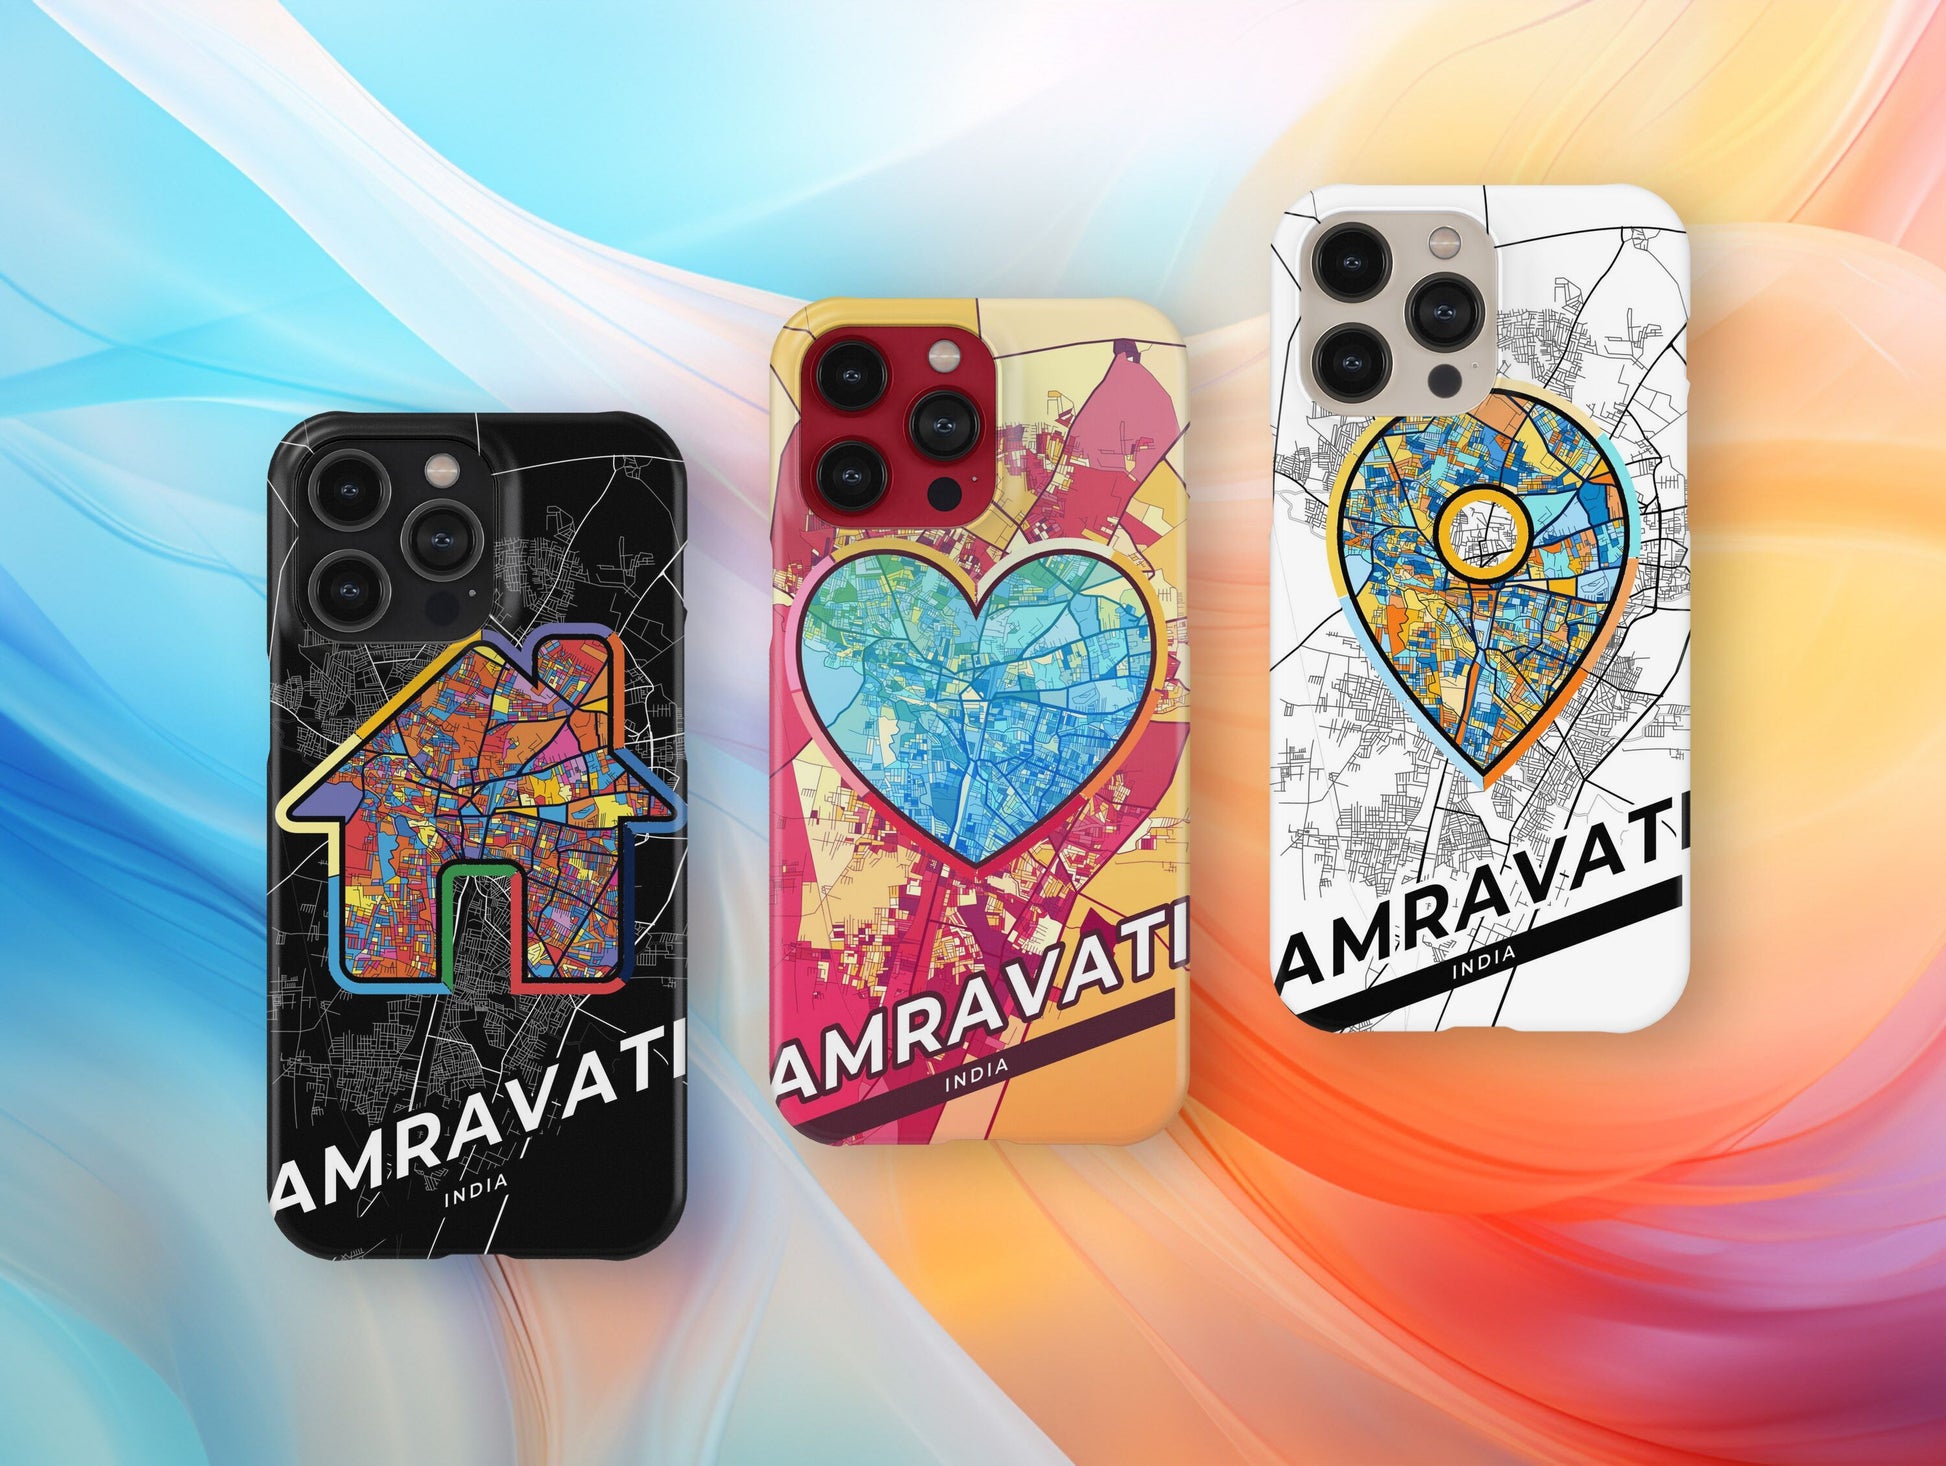 Amravati India slim phone case with colorful icon. Birthday, wedding or housewarming gift. Couple match cases.